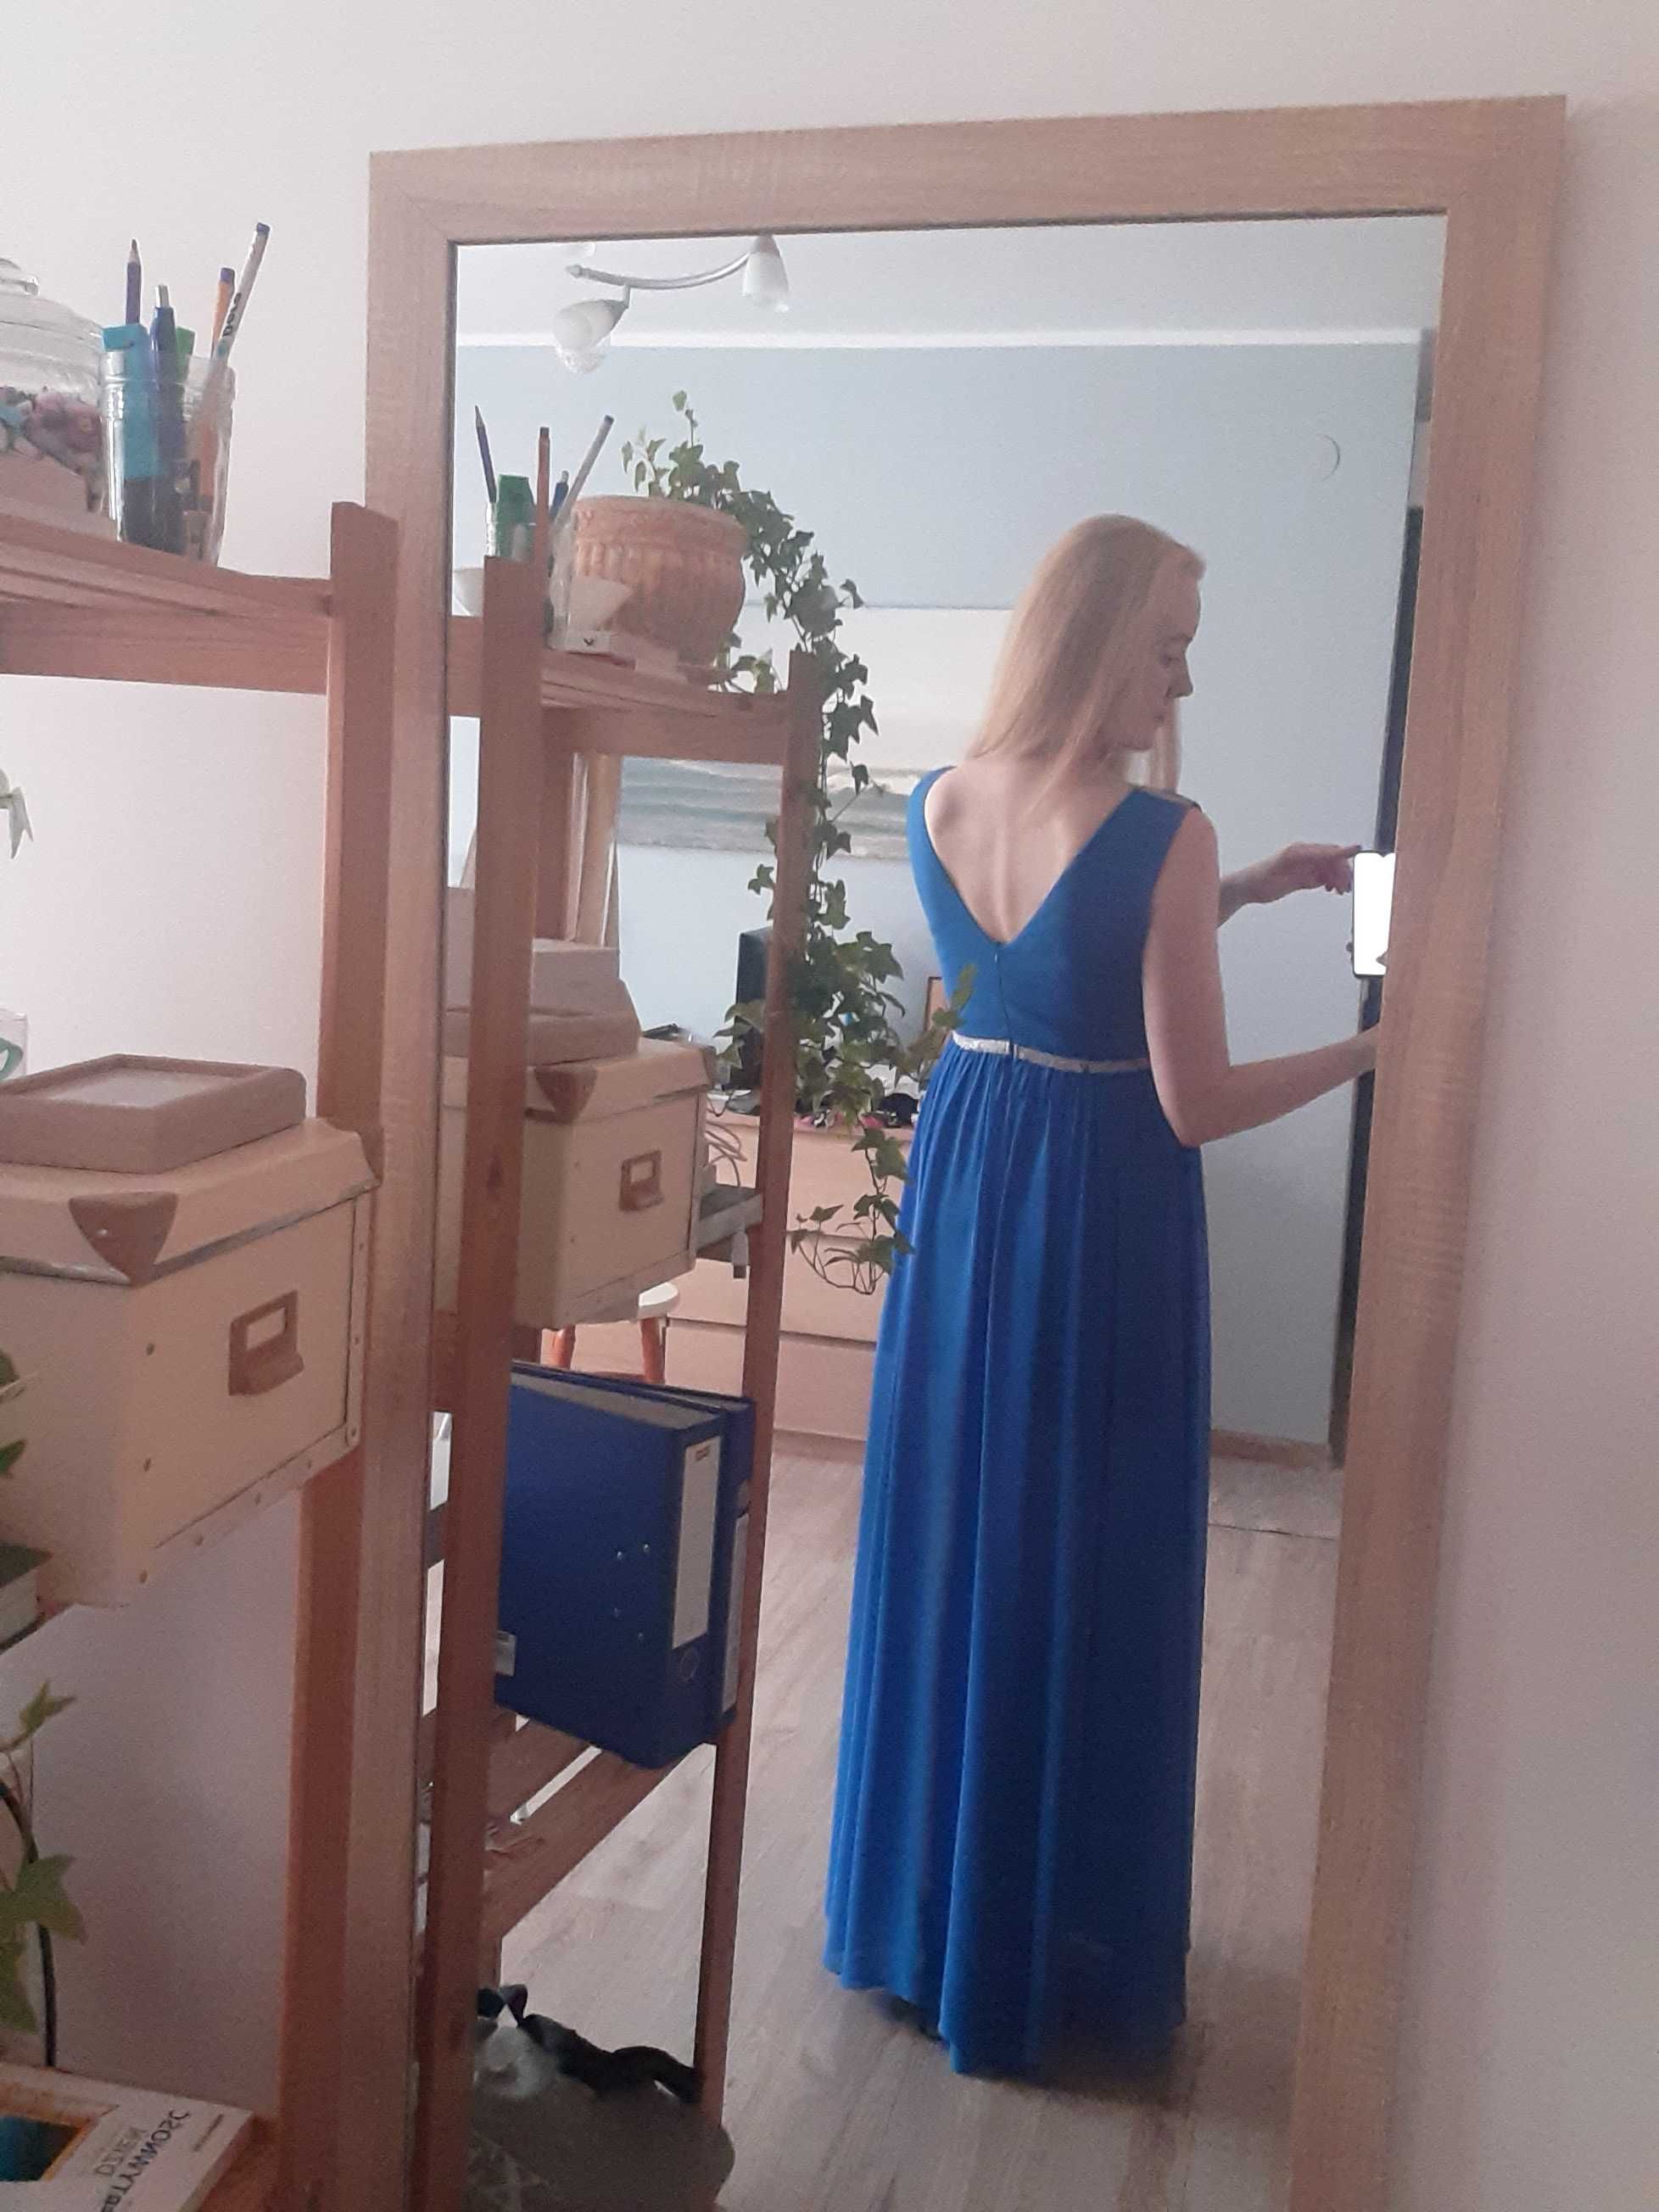 Niebieska sukienka maxi na wesele